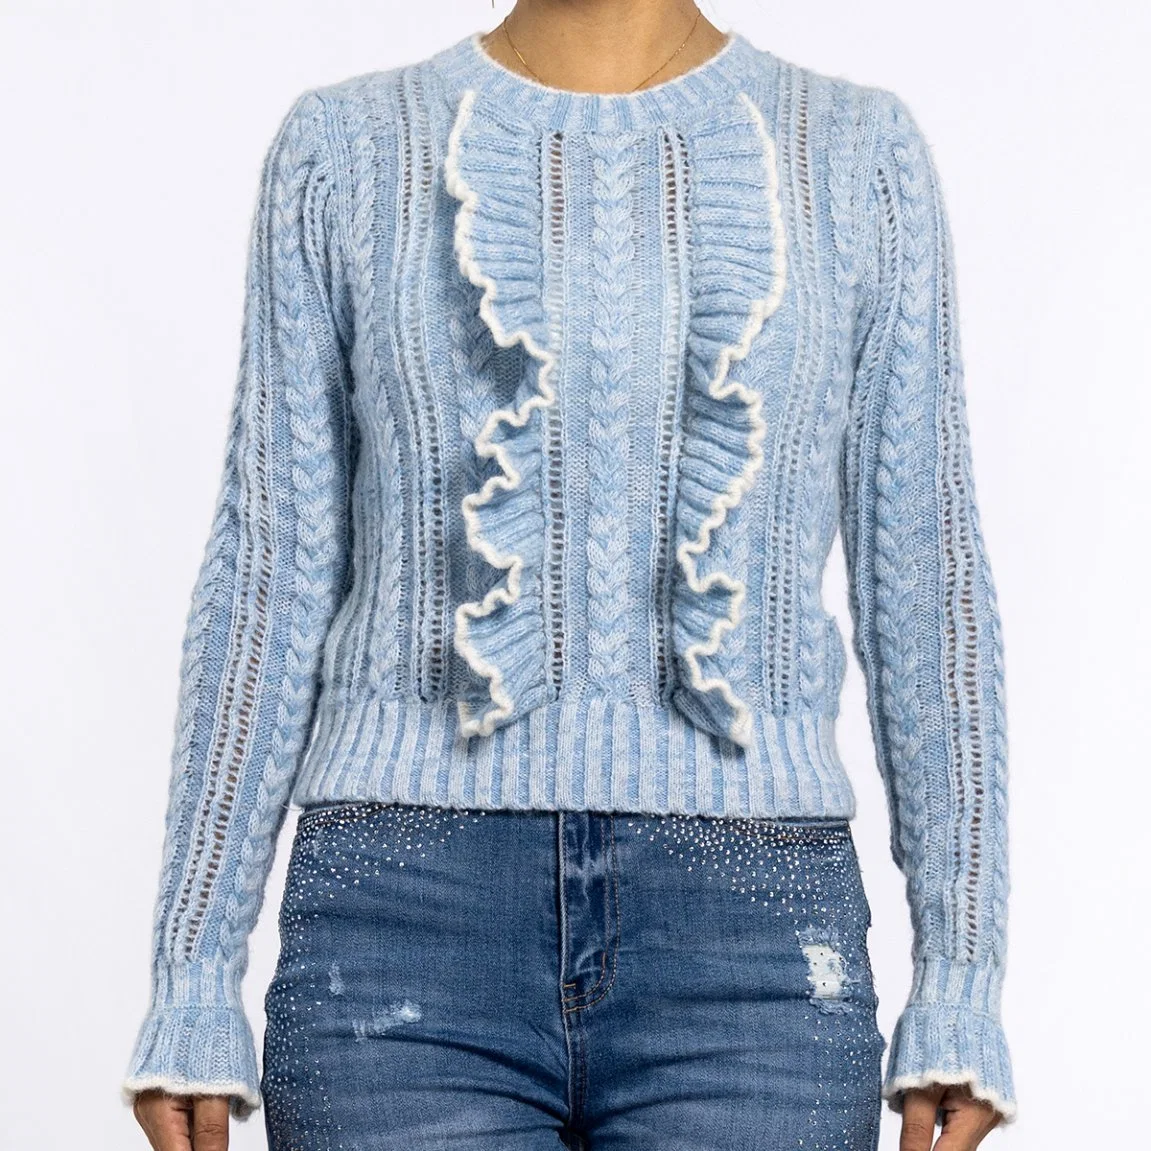 Camisola pullover de malha Mullet Fashion Autumn Blue para mulher camisolas de malha Knitwear